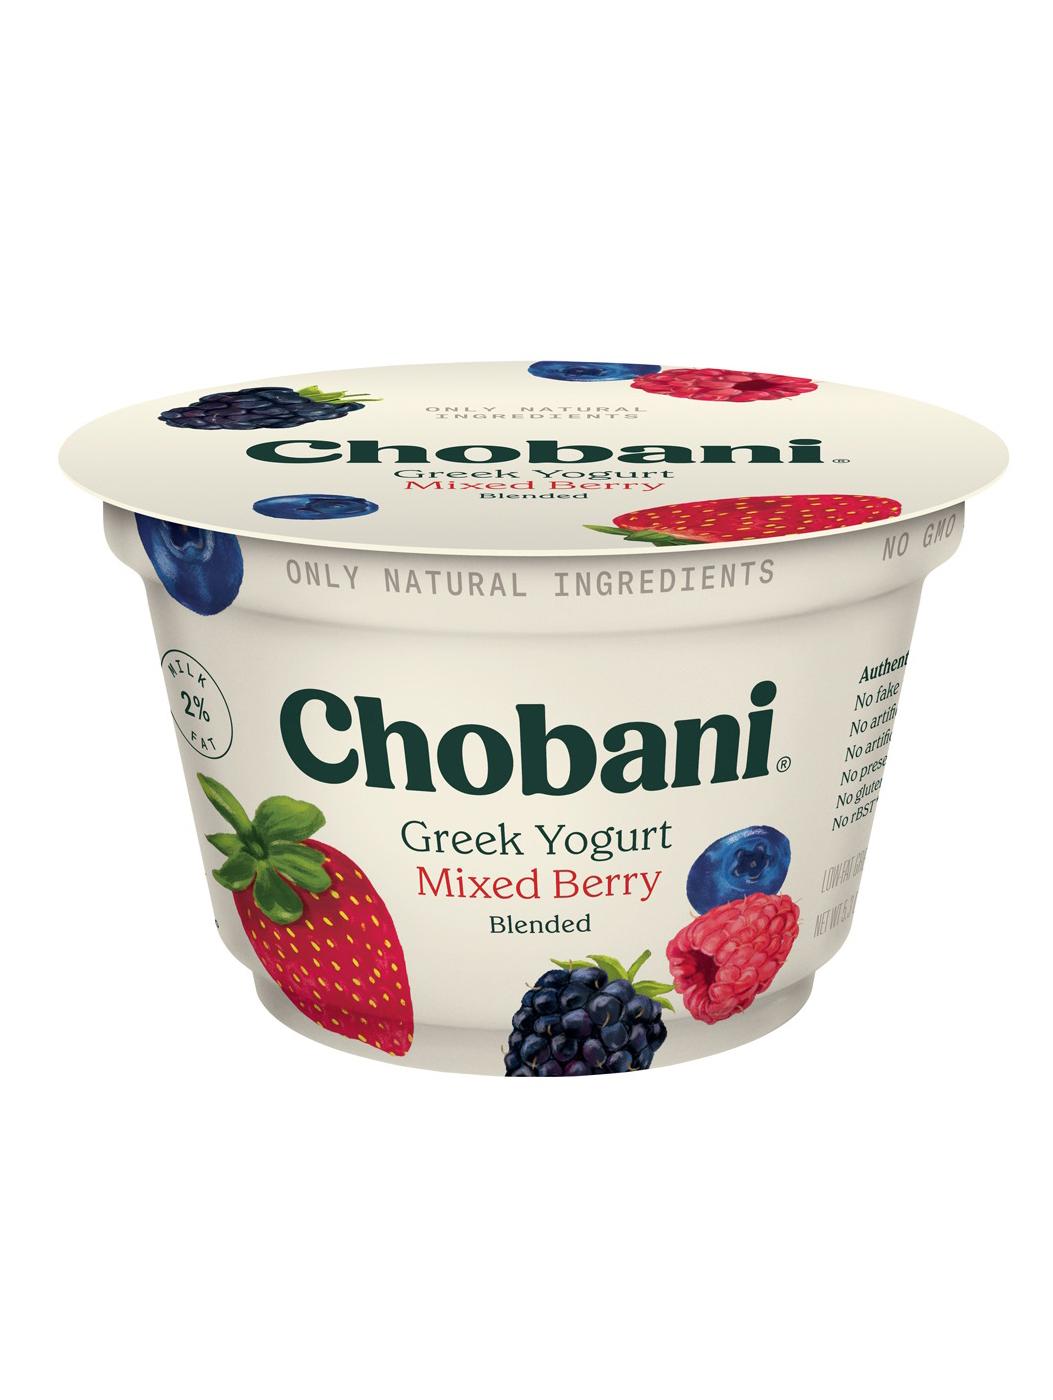 Chobani Low-Fat Mixed Berry Blended Greek Yogurt; image 1 of 4